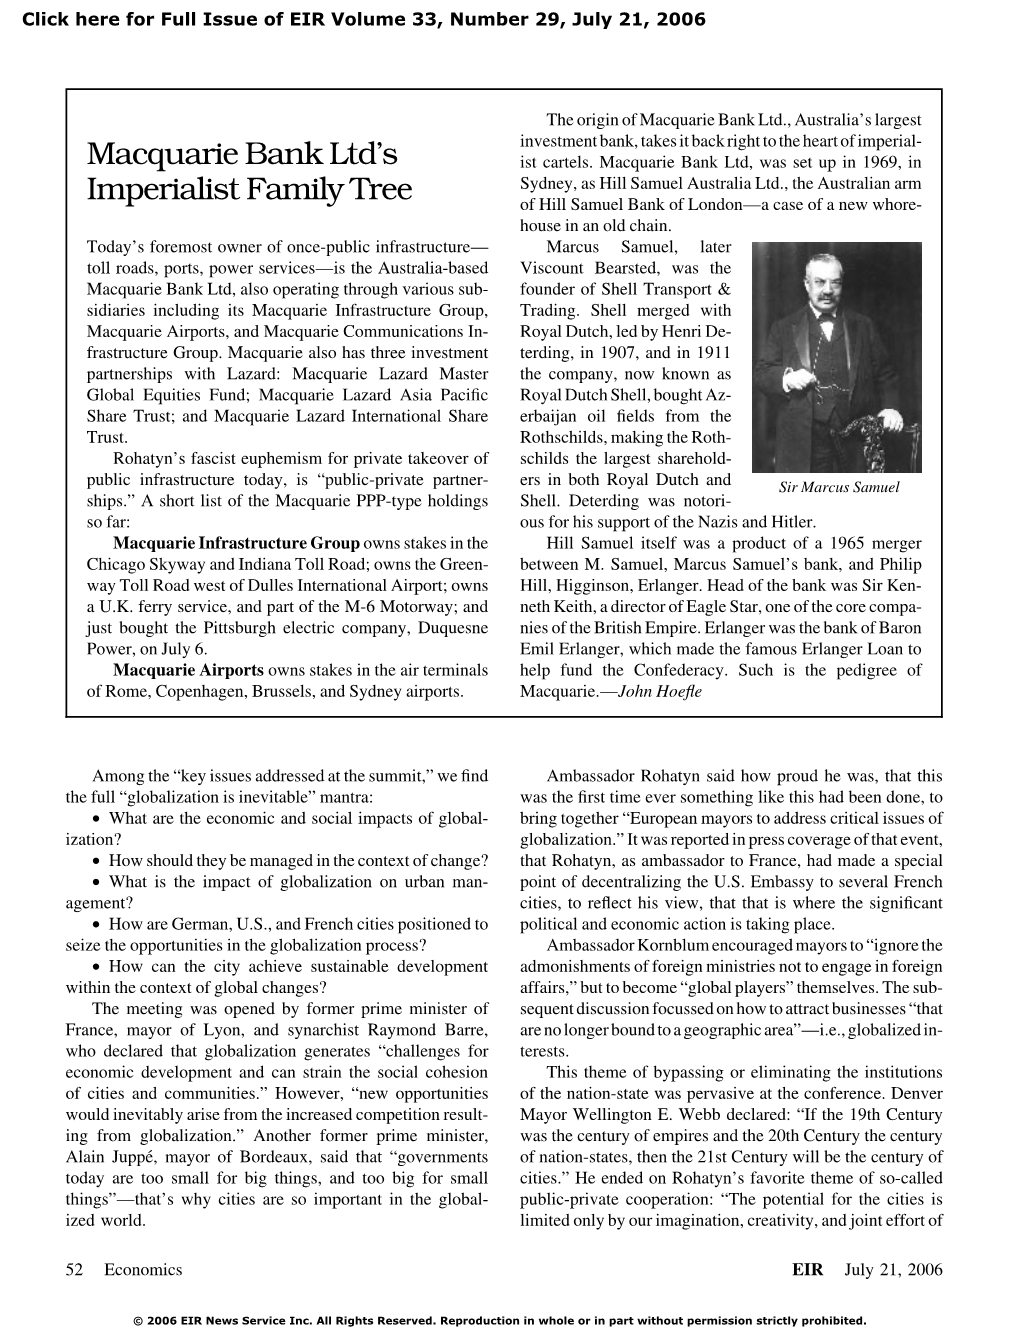 Macquarie Bank Ltd's Imperialist Family Tree